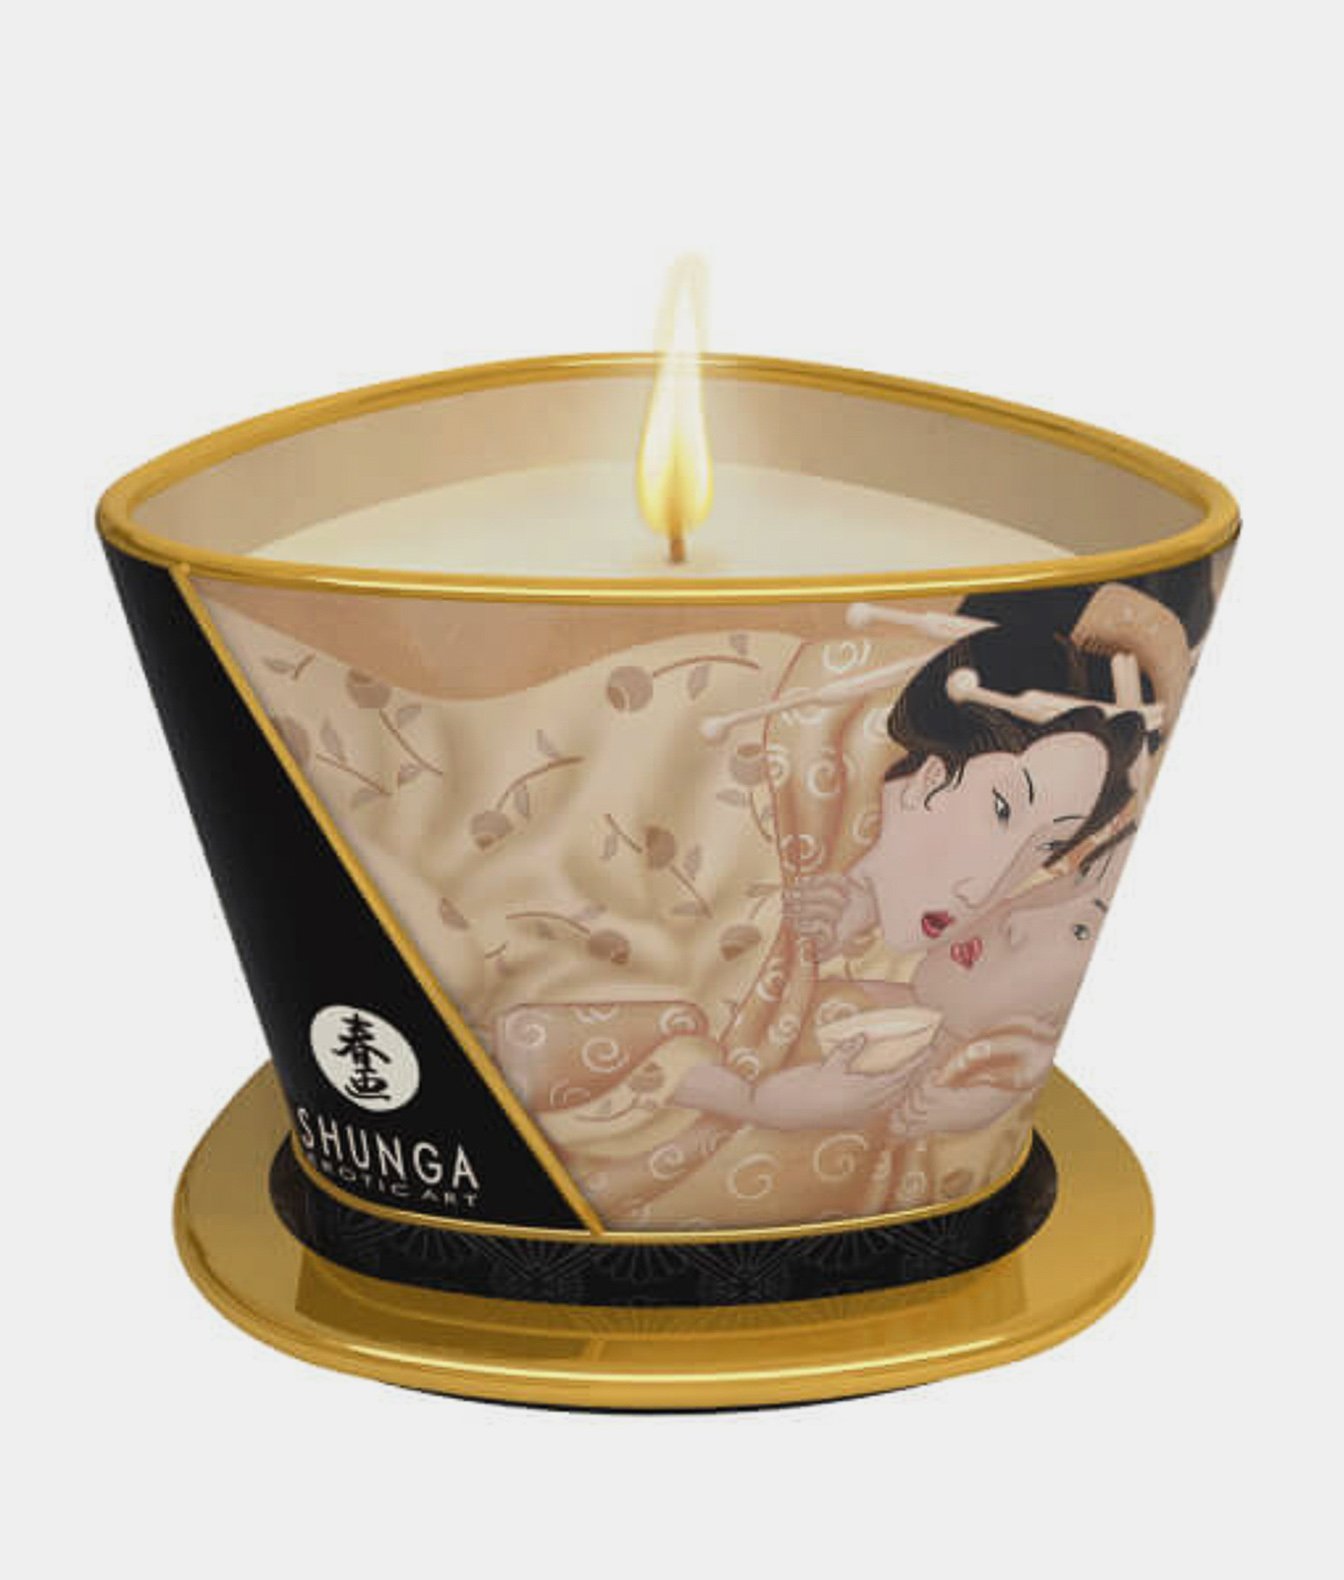 Shunga świeca do masażu